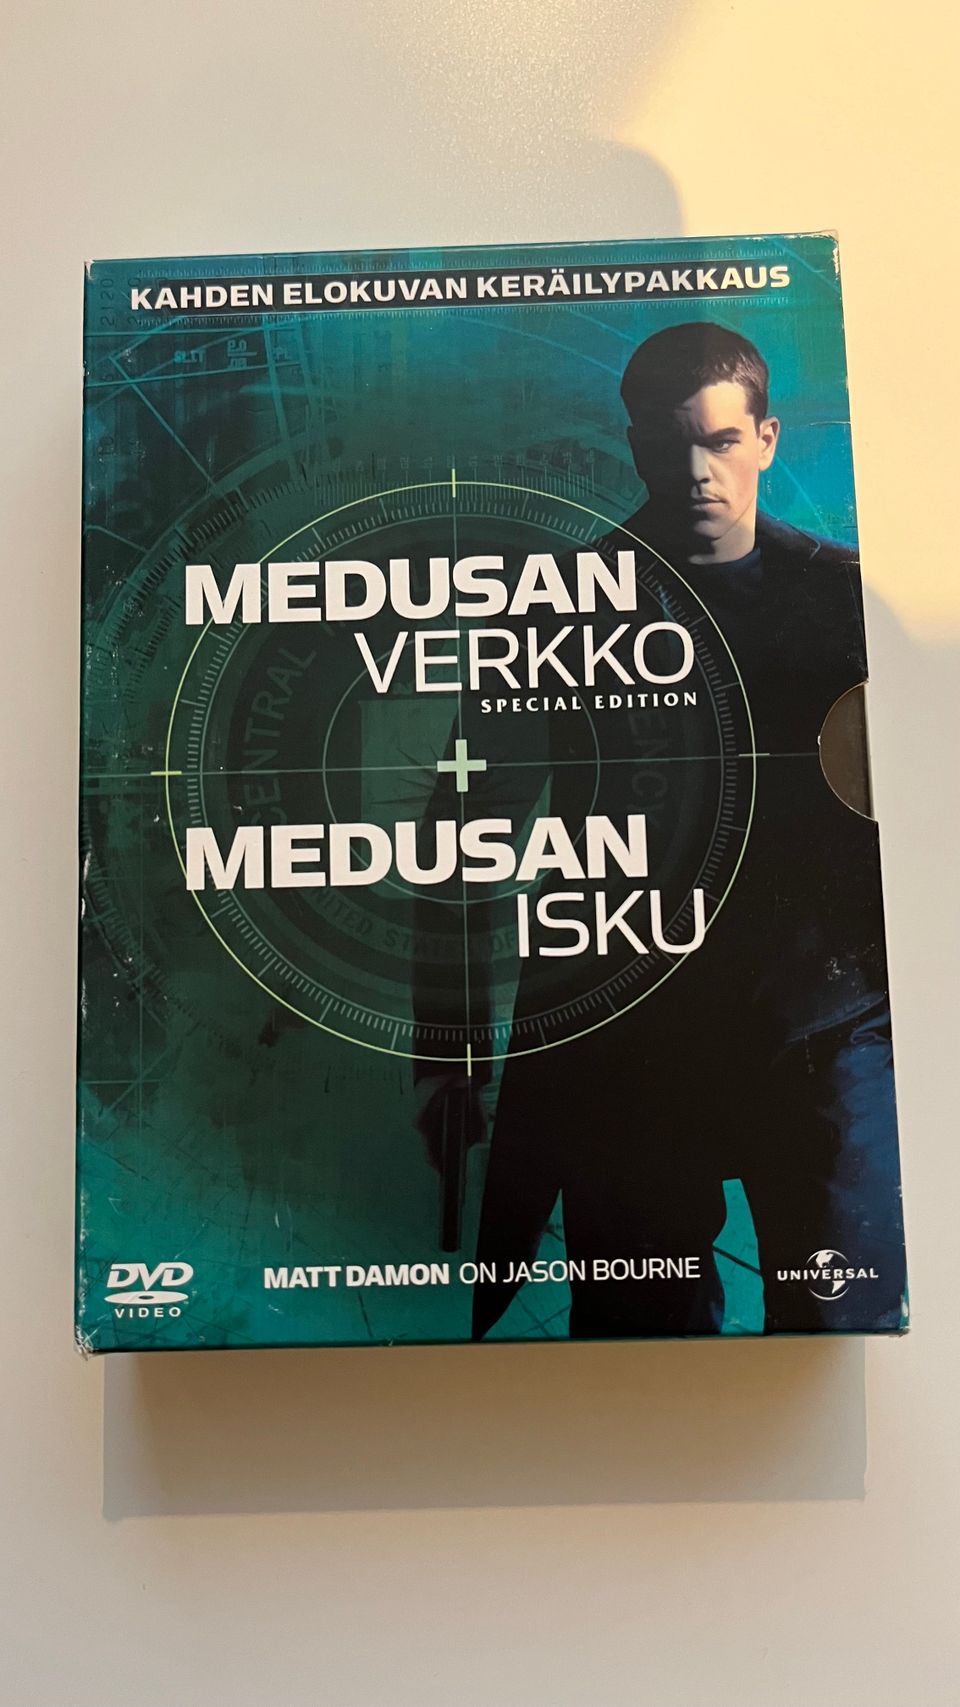 Medusan verkko + Medusan isku DVD kokoelma